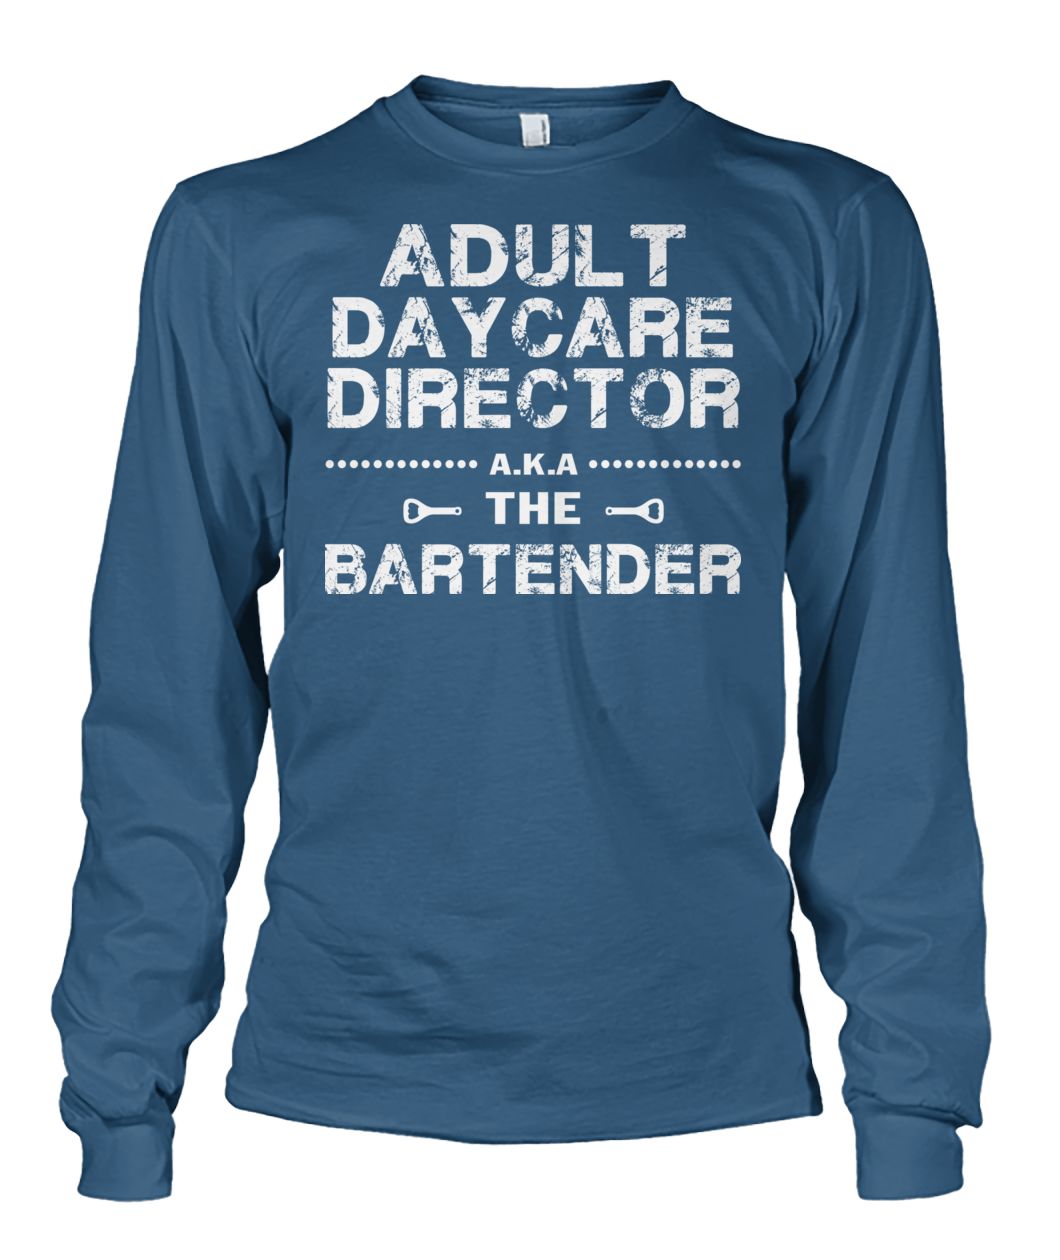 Adult daycare director aka the bartender unisex long sleeve